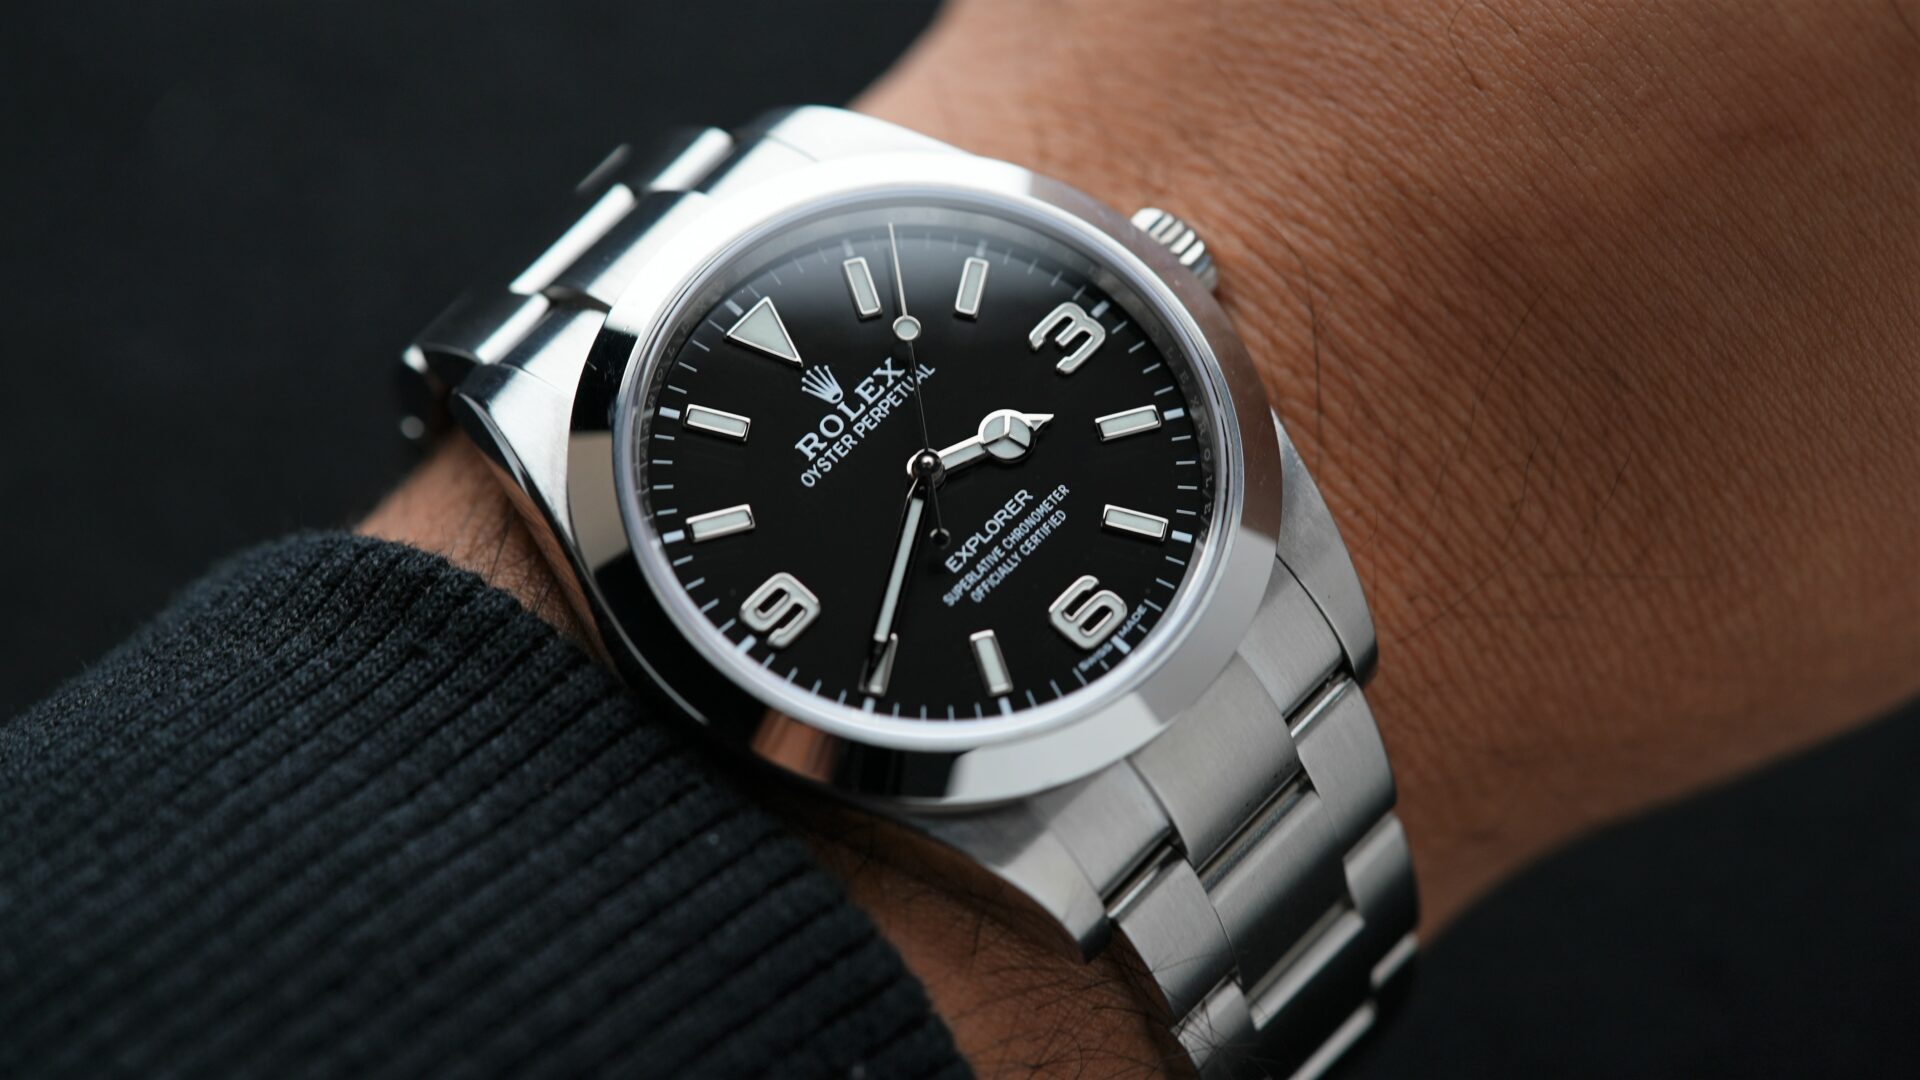 Rolex Explorer 214270 39mm watch being displayed on the wrist.